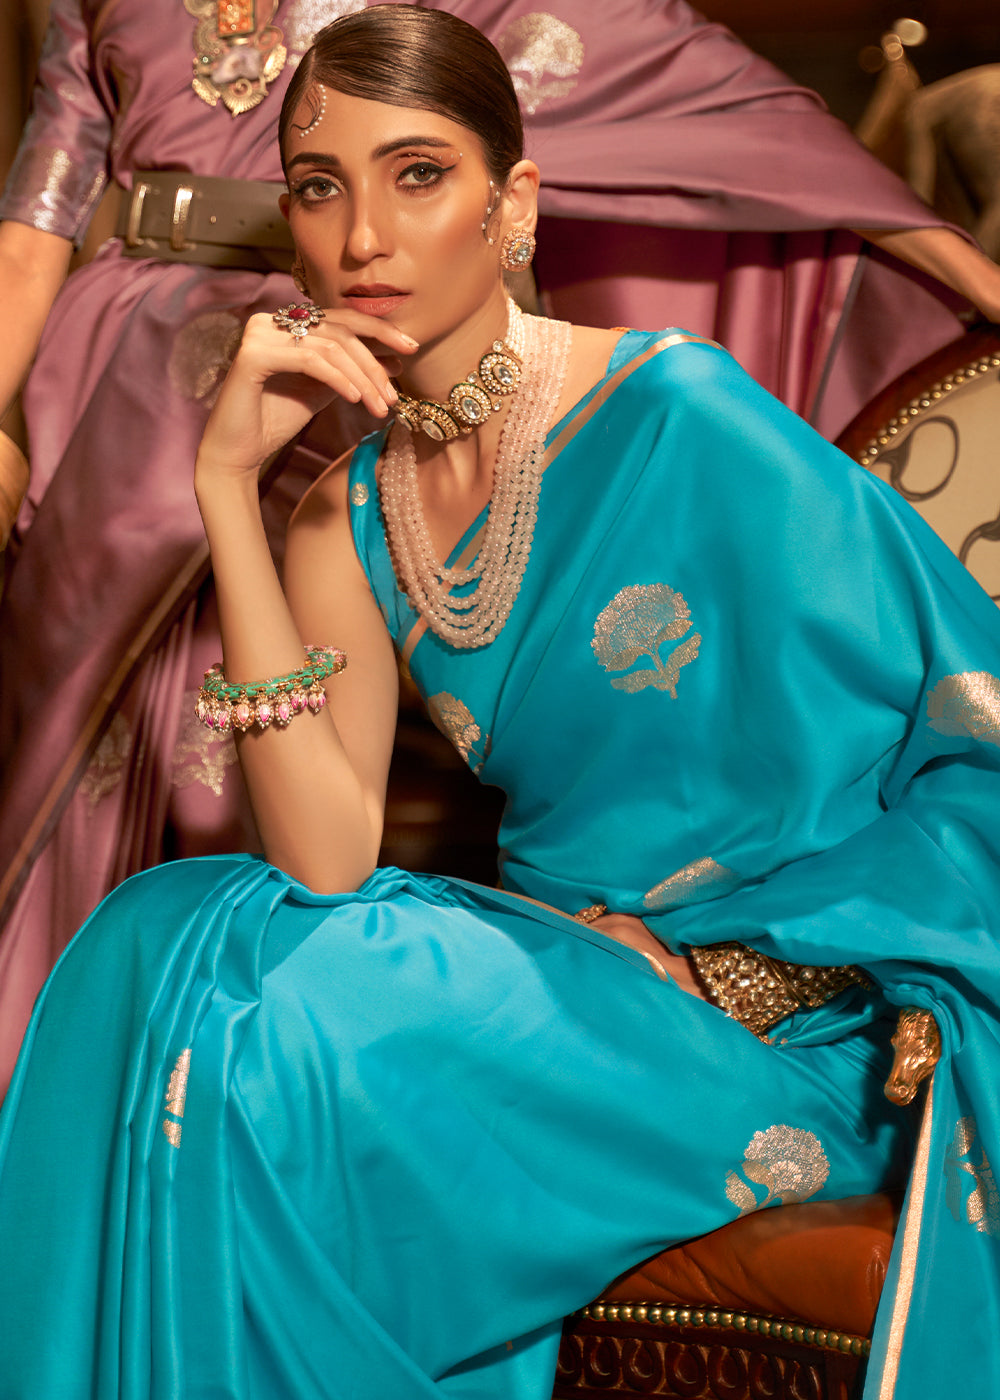 Cyan Blue Zari Woven Satin Silk Saree - Colorful Saree